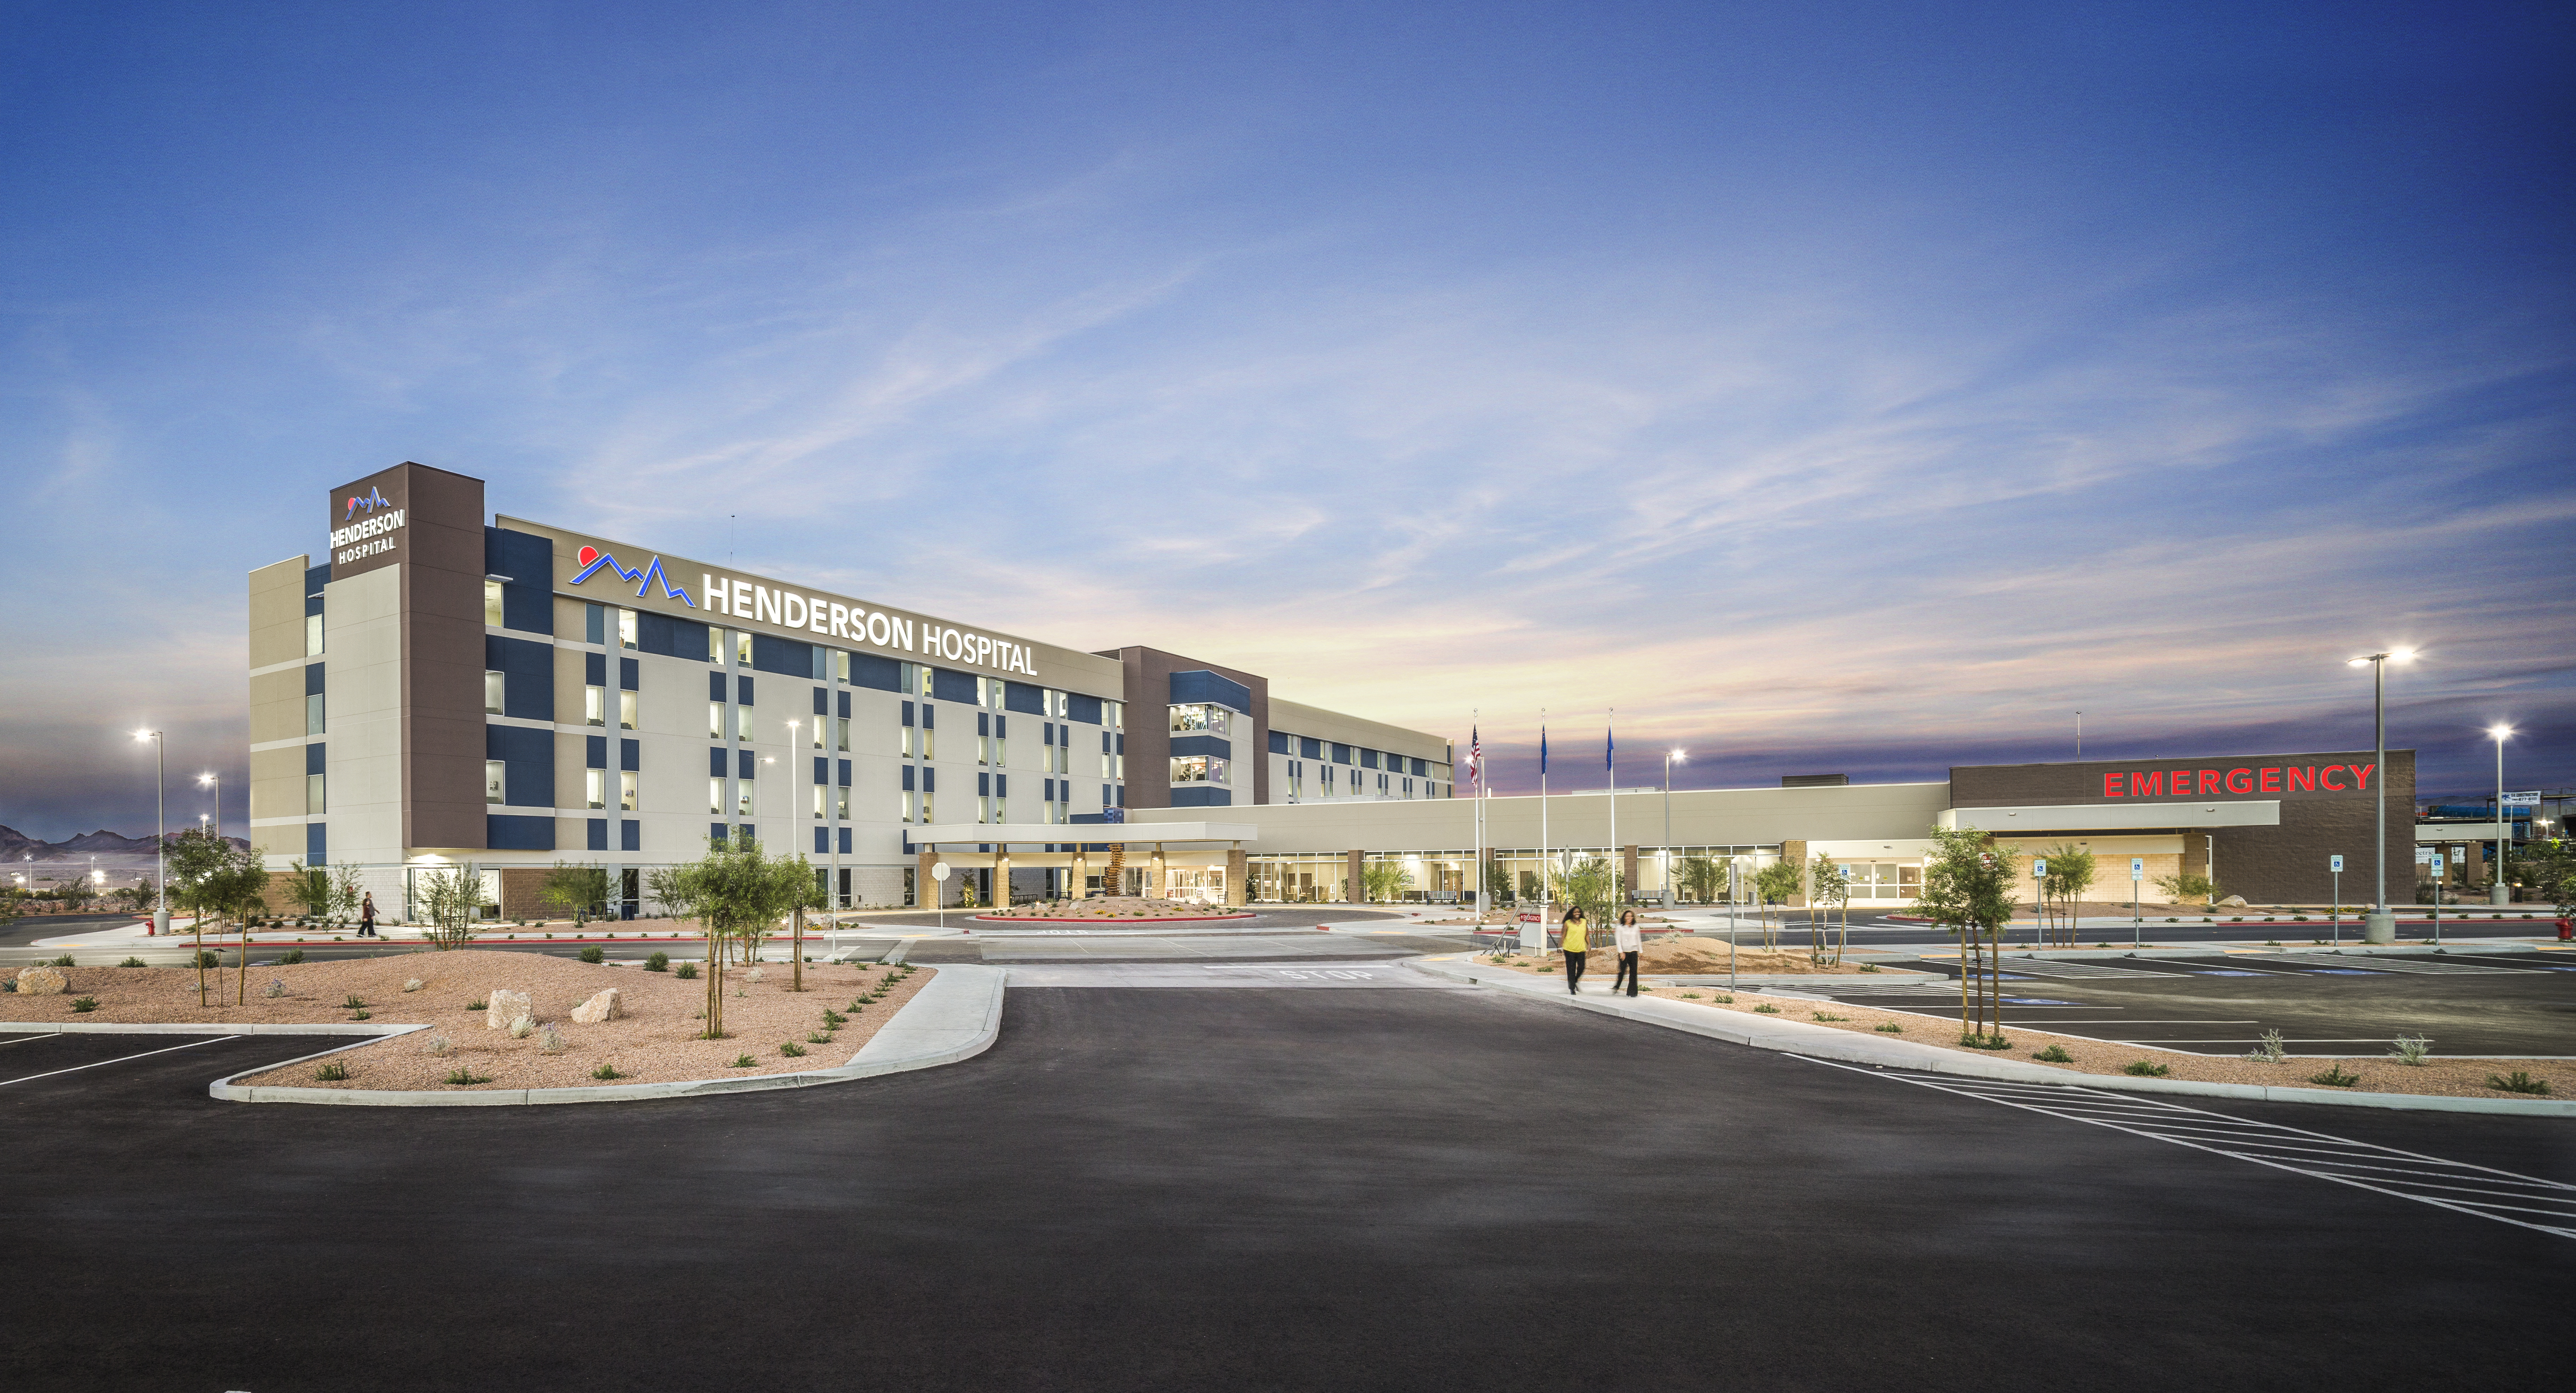 Henderson Hospital administrators embraced Lean design in healthcare.